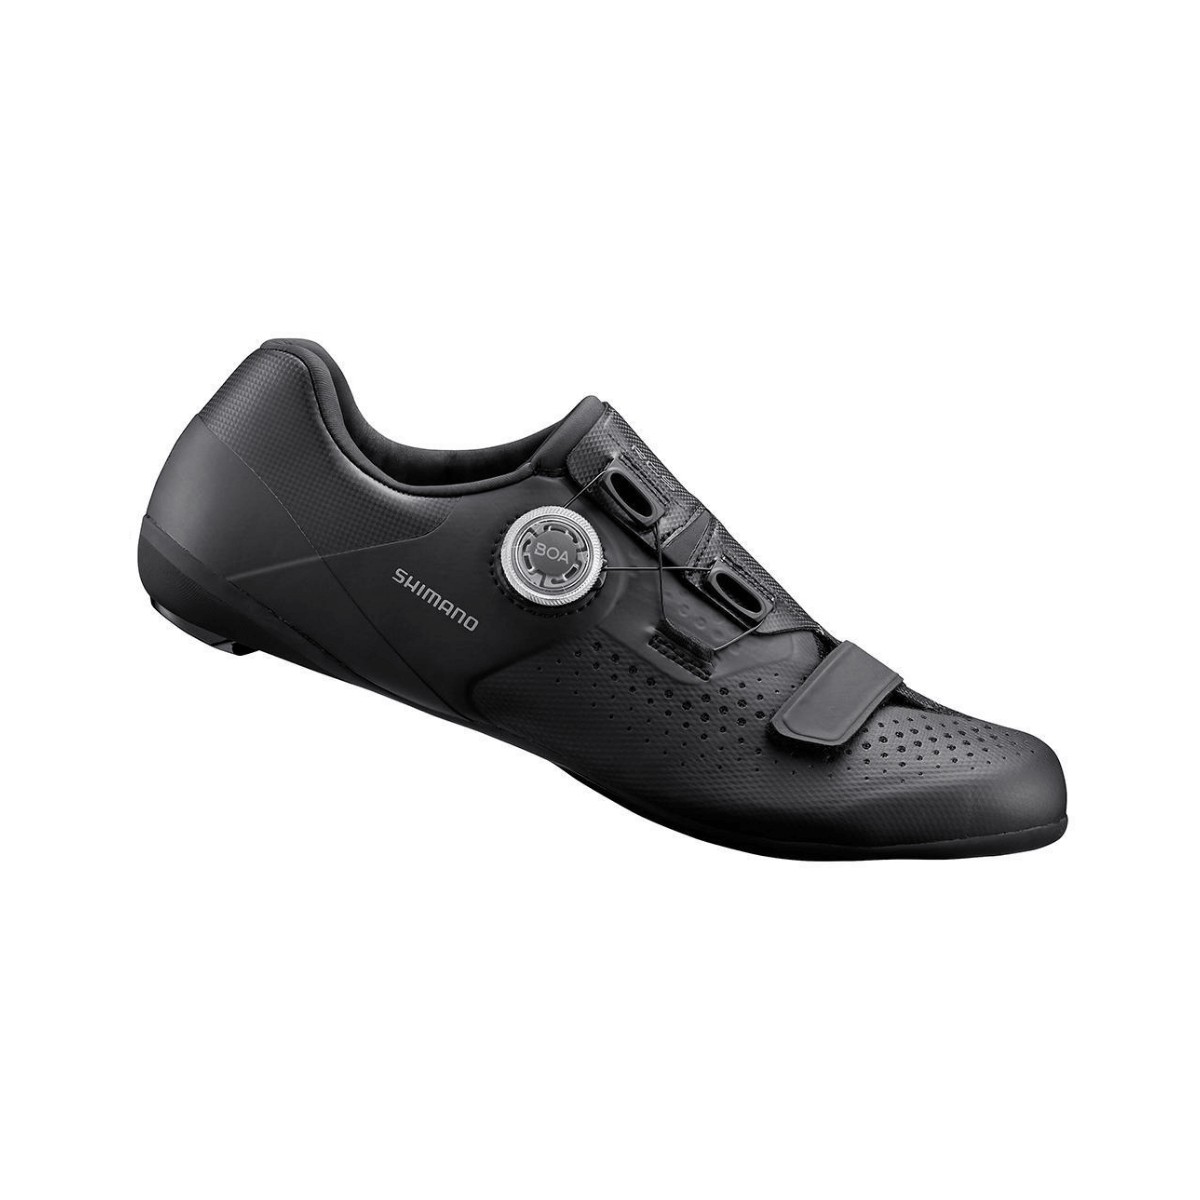 Shimano RC500 Road Shoes Black, Size 44 - EUR